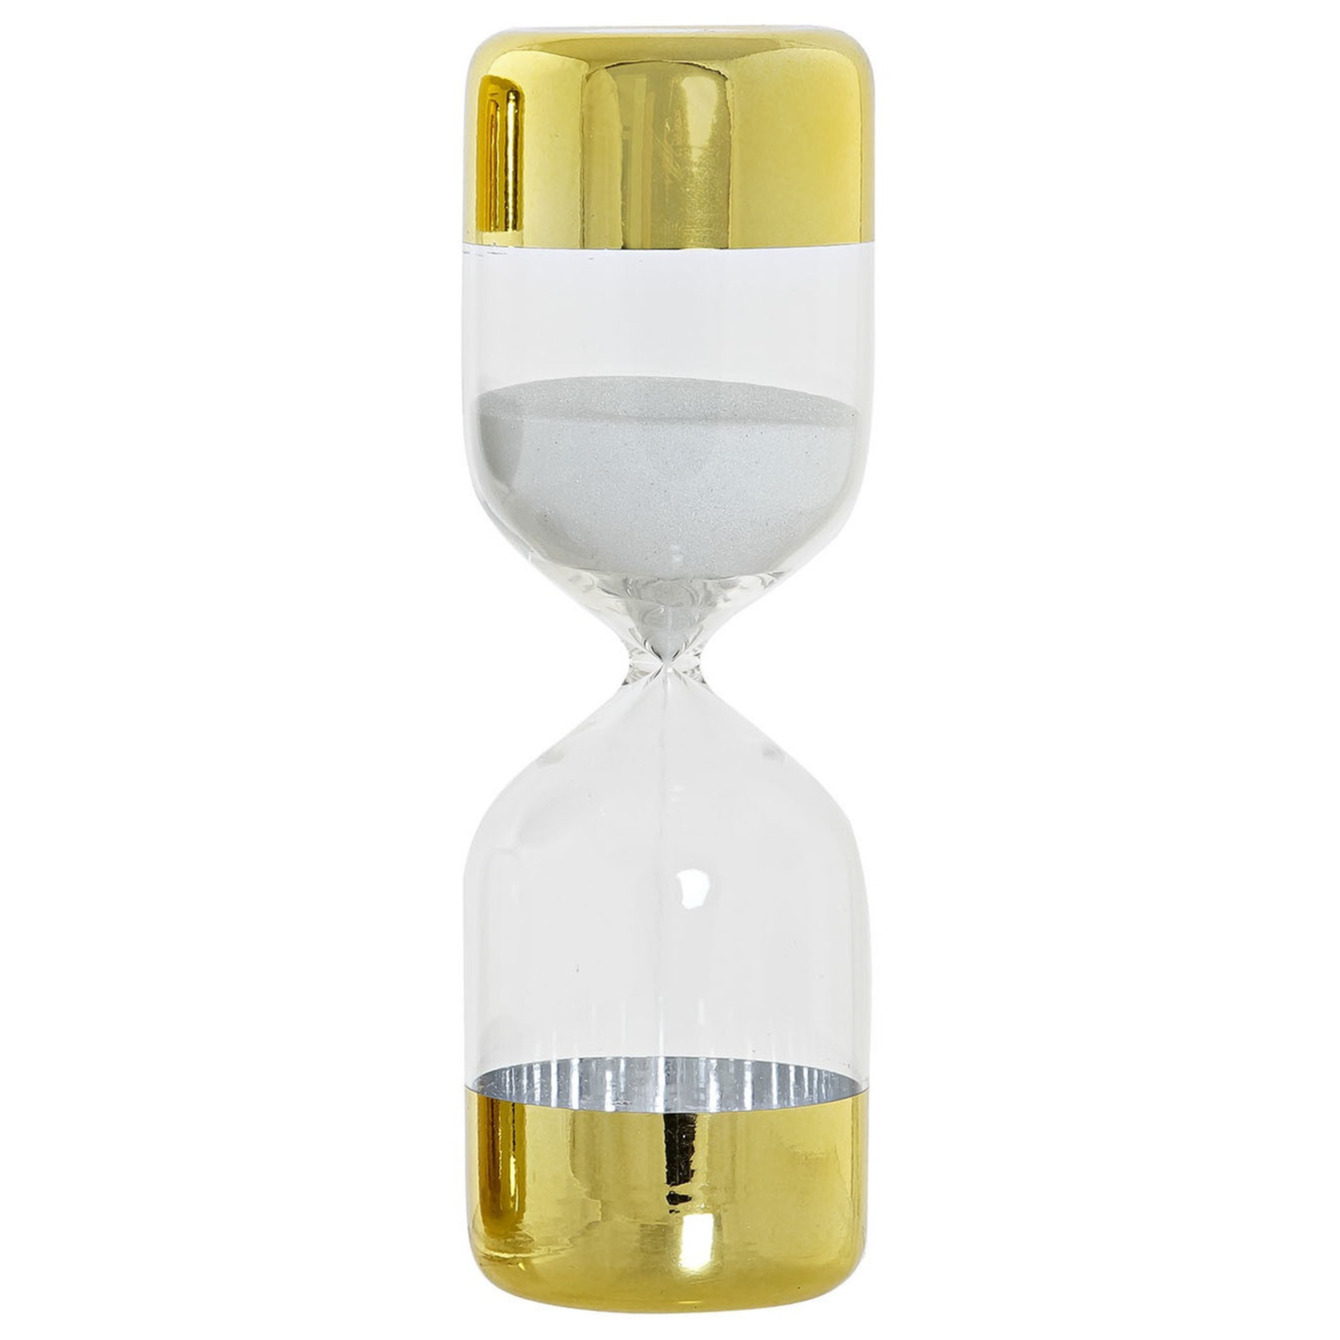 Merkloos Zandloper cilinder - decoratie of tijdsmeting - 15 minuten - wit zand - D6,5 x H20,5 cm - glas -